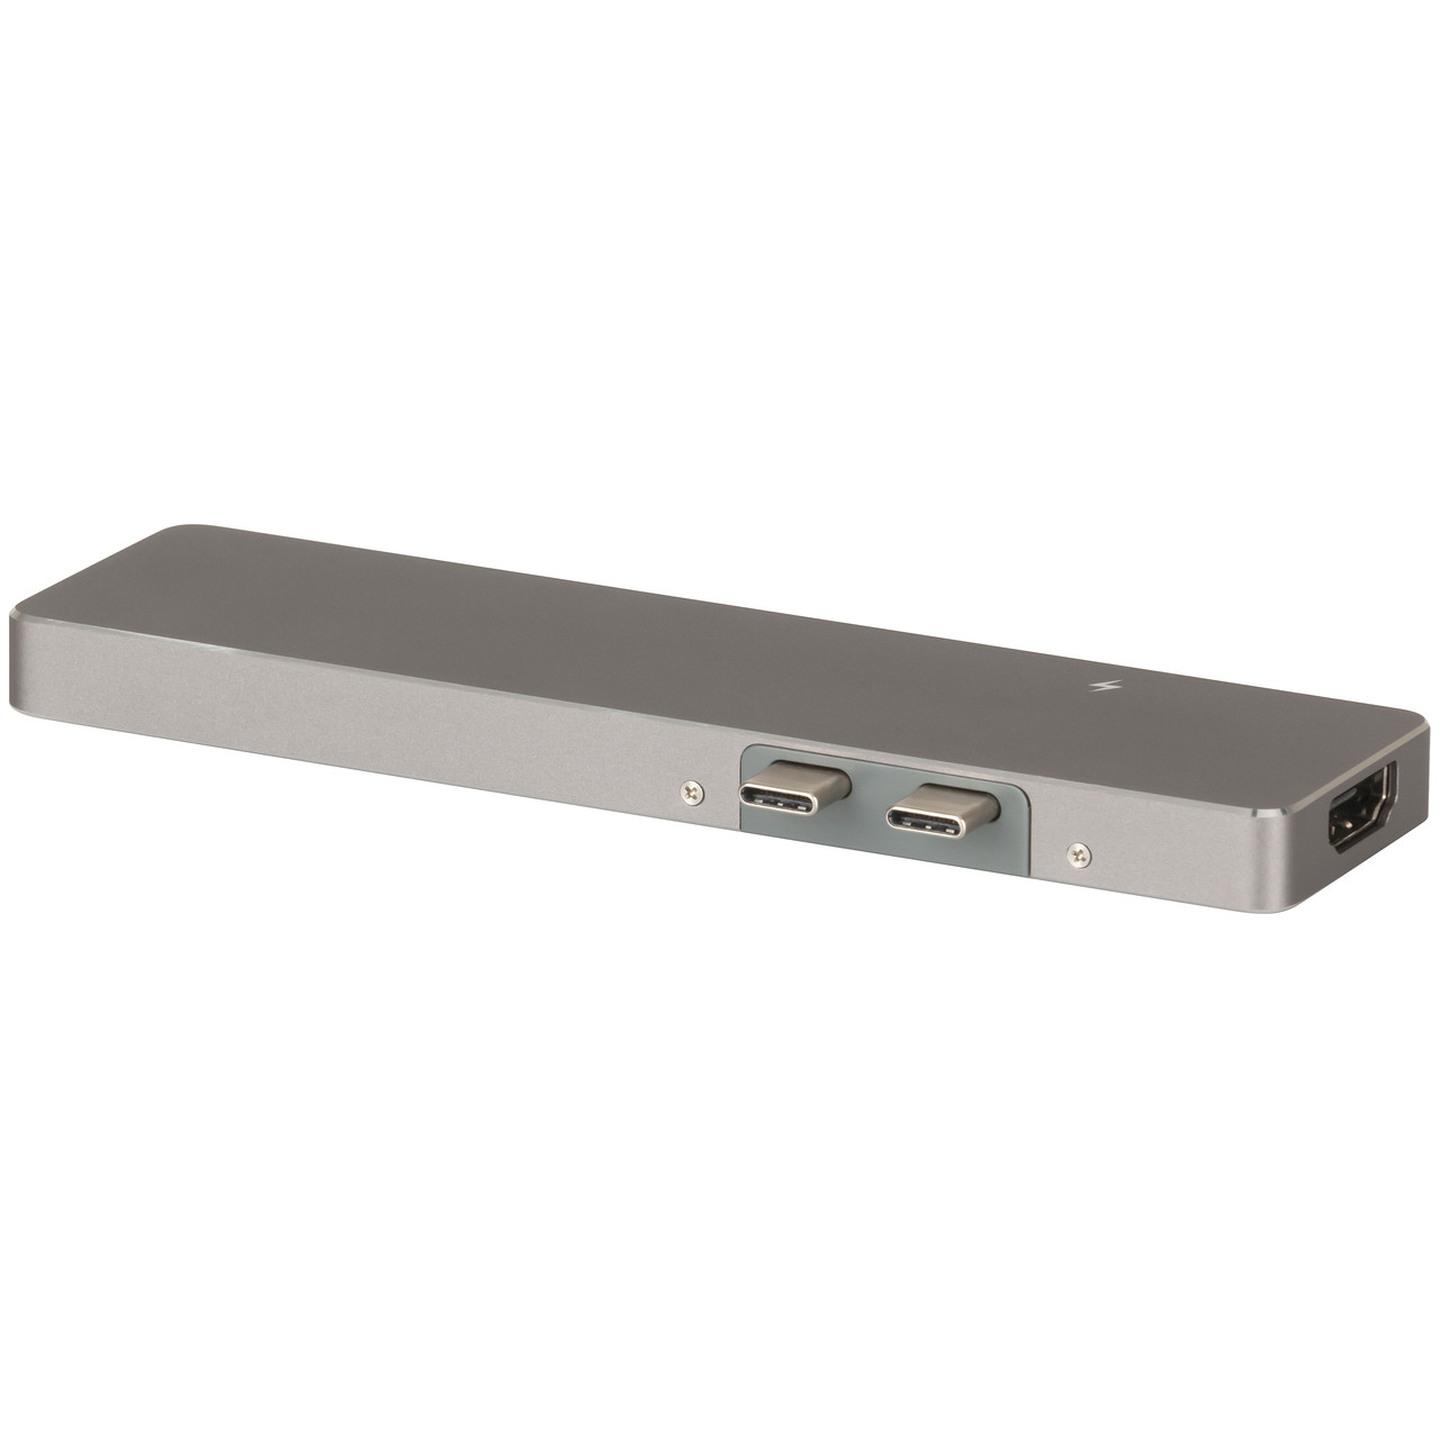 Thunderbolt 3 Dock with 4K HDMI USB 3.0 Port and Card Reader